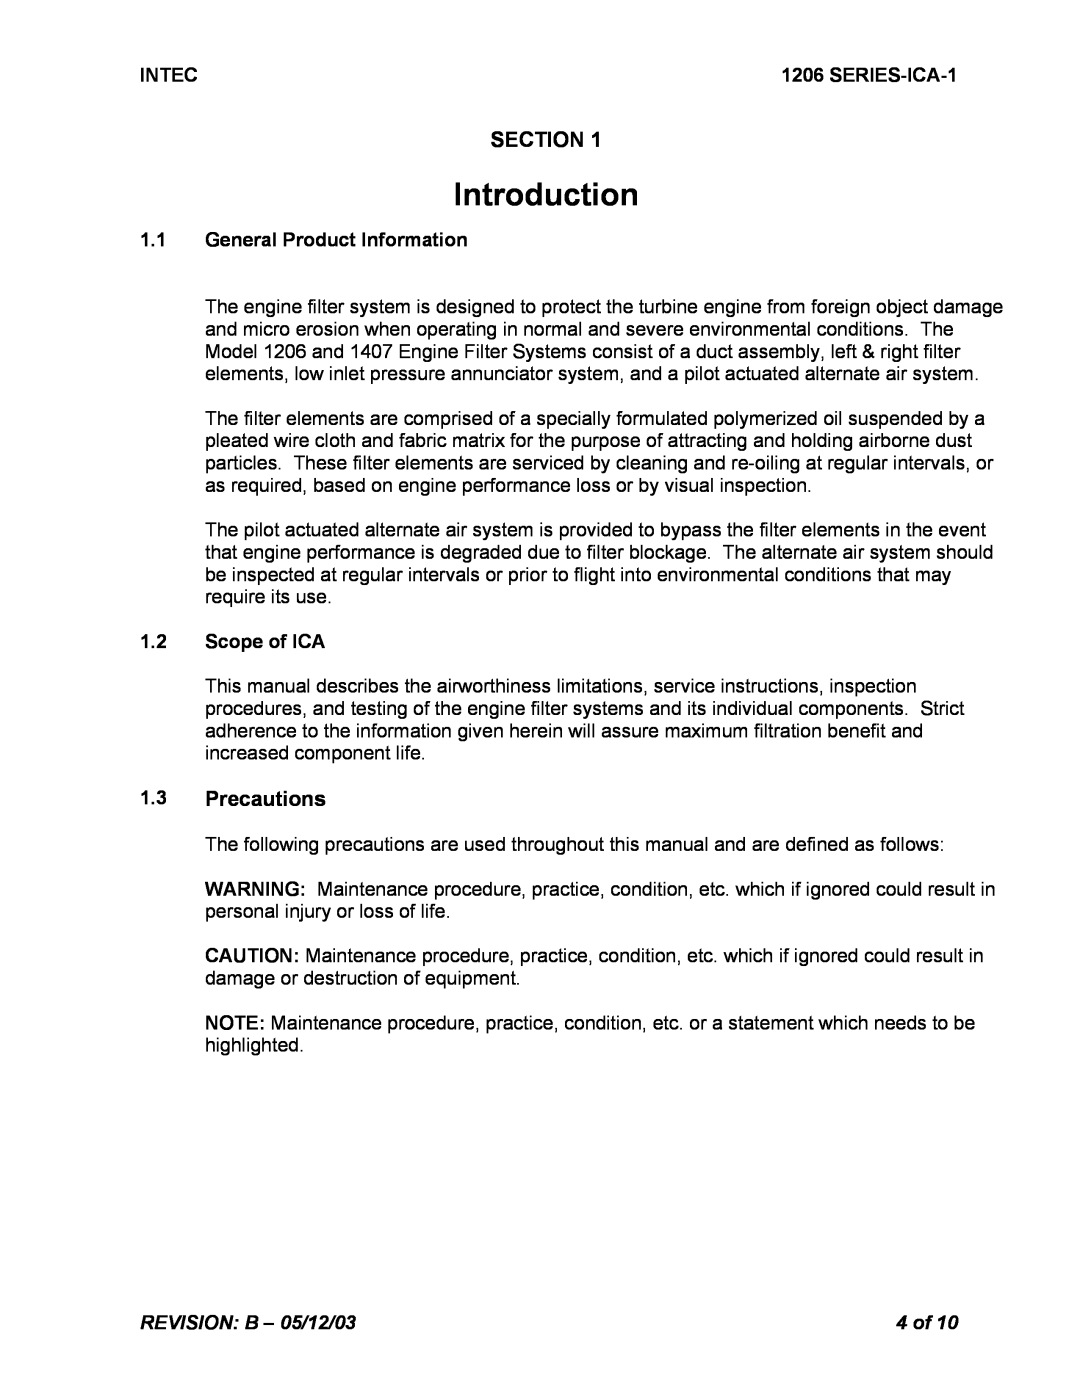 Intec STC SR00180SE manual Introduction, 1.3Precautions, Section 